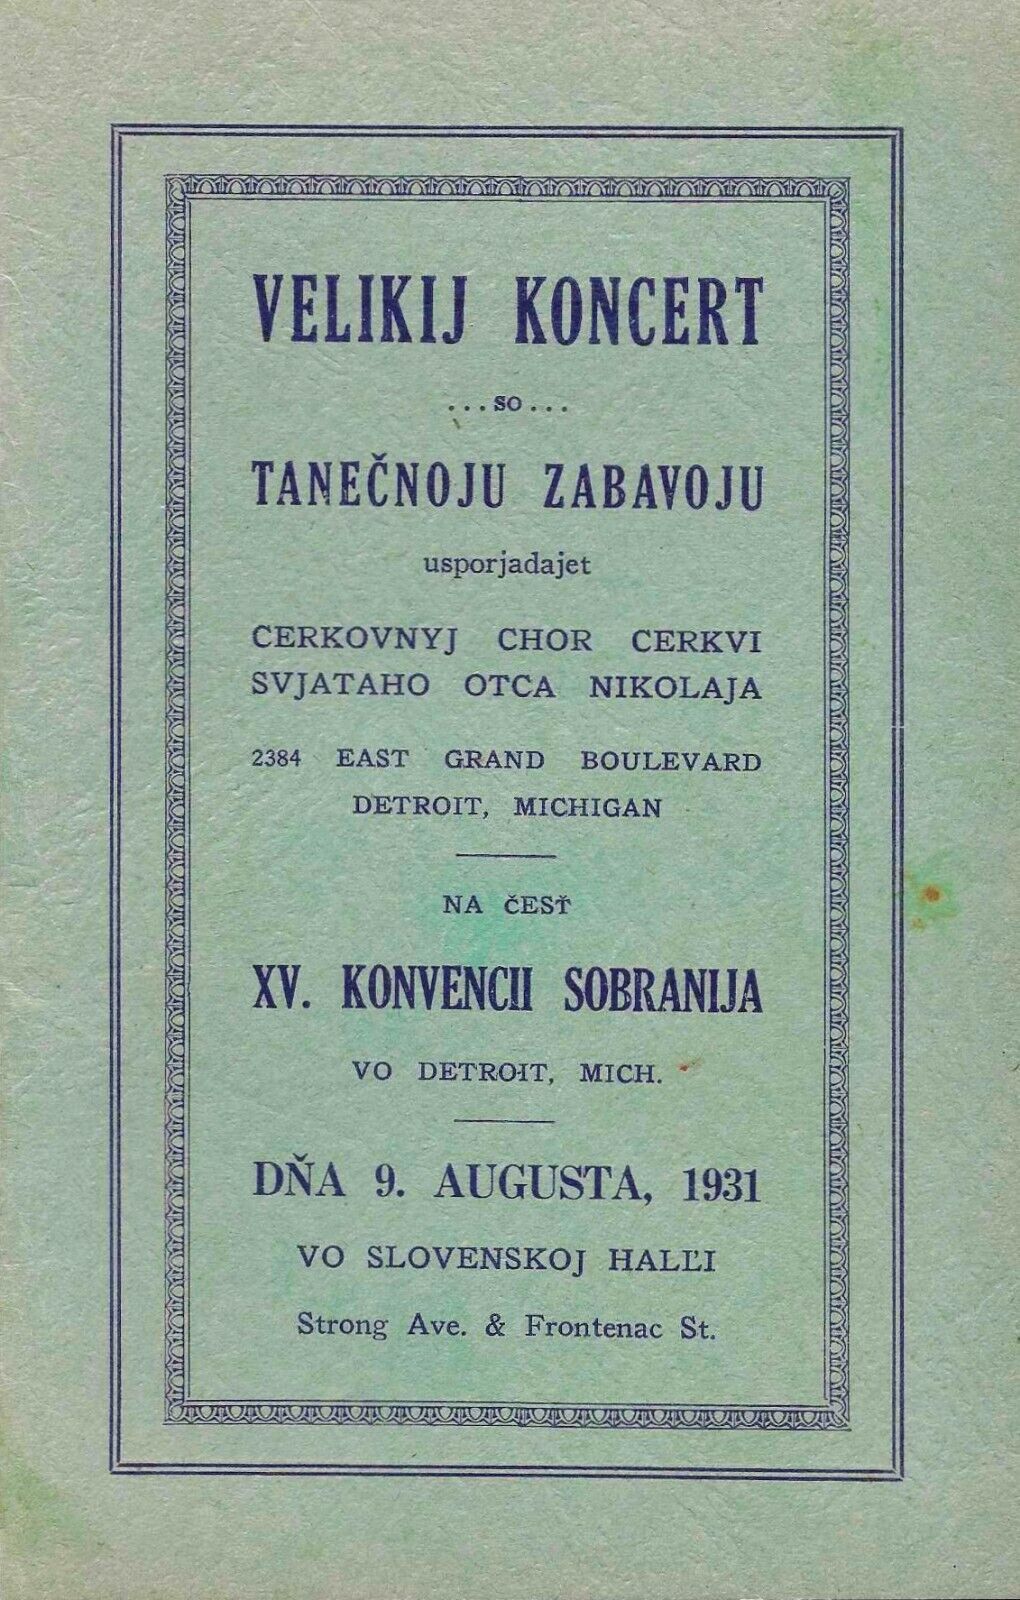 1931 CONCERT PROGRAM (IN SLOVAK) - ST NICHOLAS CHURCH CHOIR - DETROIT, MICHIGAN